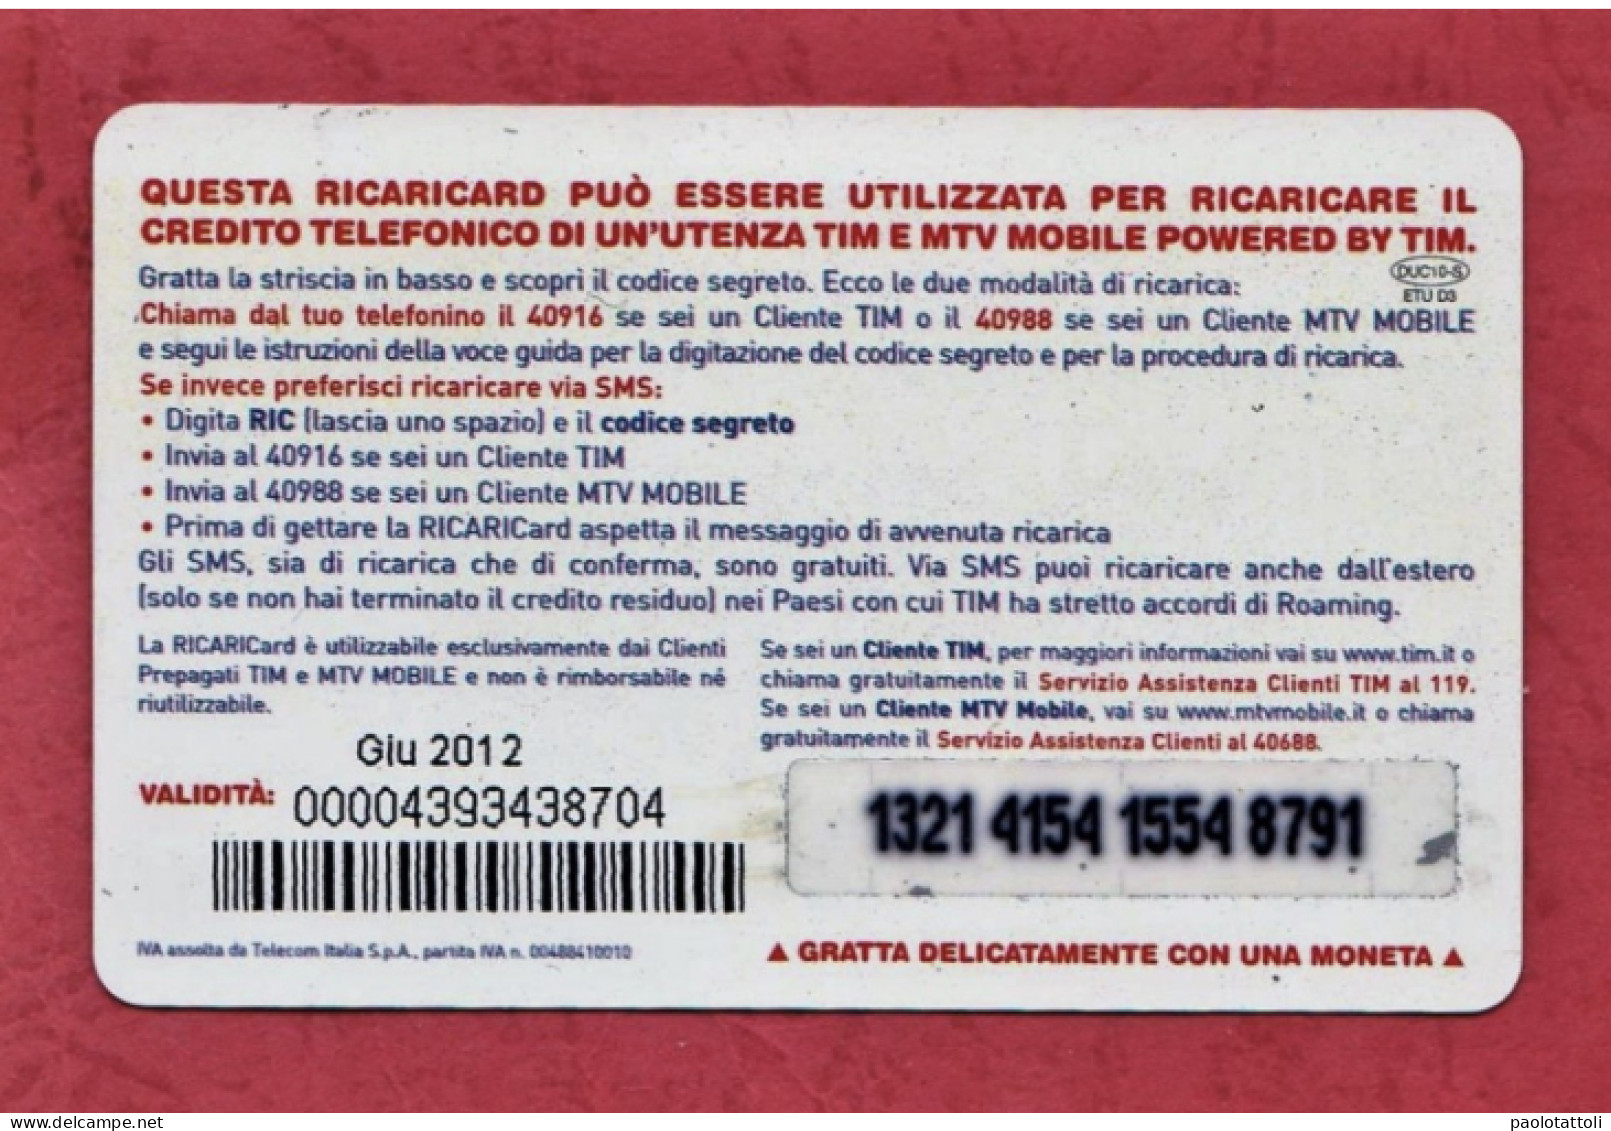 IItalia, Italy- Ricarica Telefonica,TIM  Mobile Pop Up Card- Moto GP 2010. Round 01, Quatar 11.4.2010- 10 Euro. - [2] Tarjetas Móviles, Prepagadas & Recargos